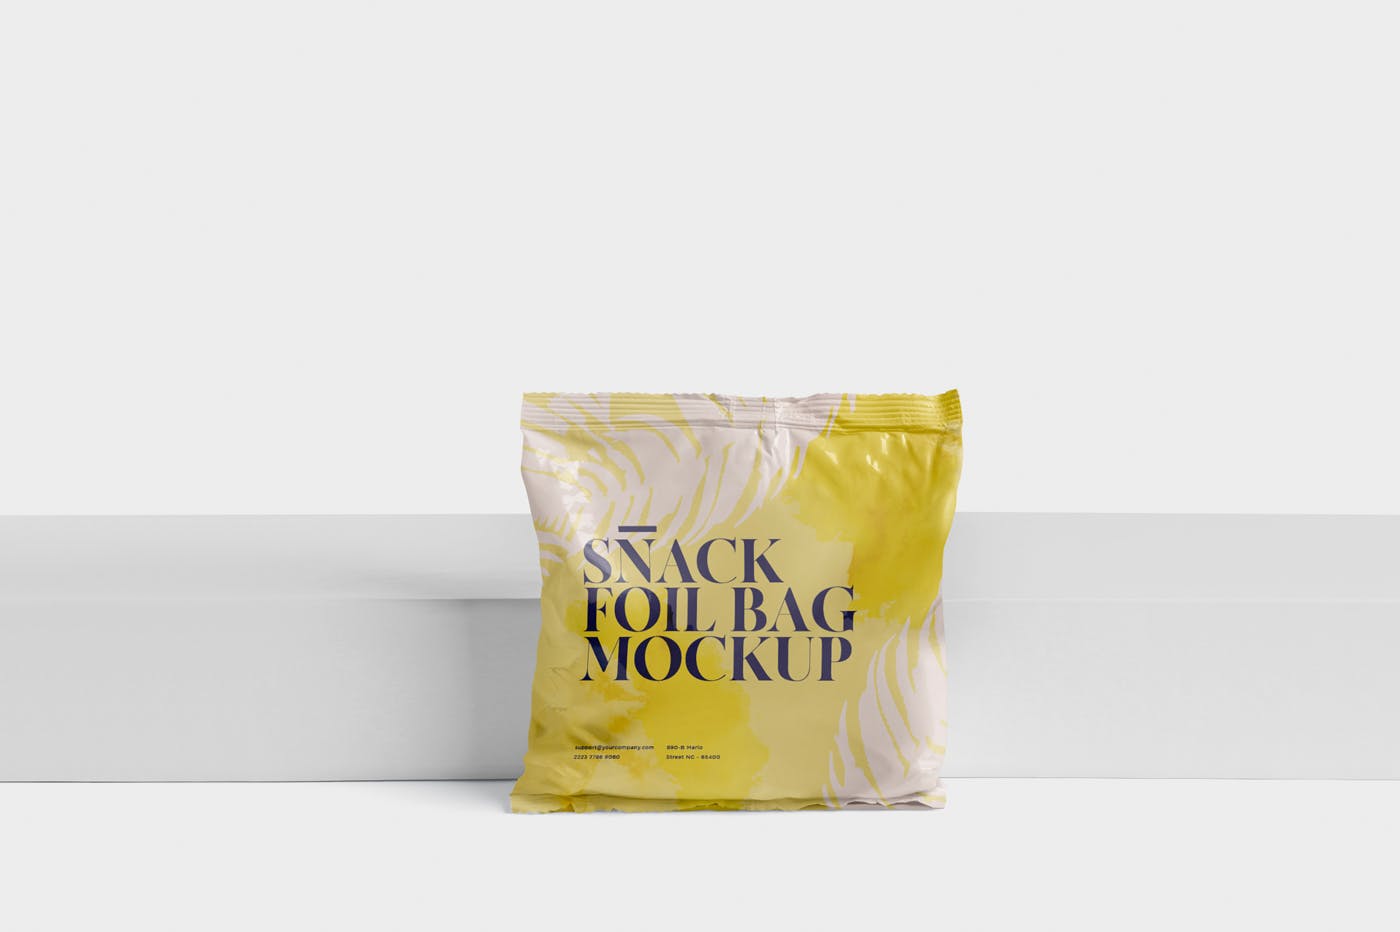 小吃零食铝箔包装袋设计图素材库精选 Snack Foil Bag Mockup – Square Size – Small插图(3)